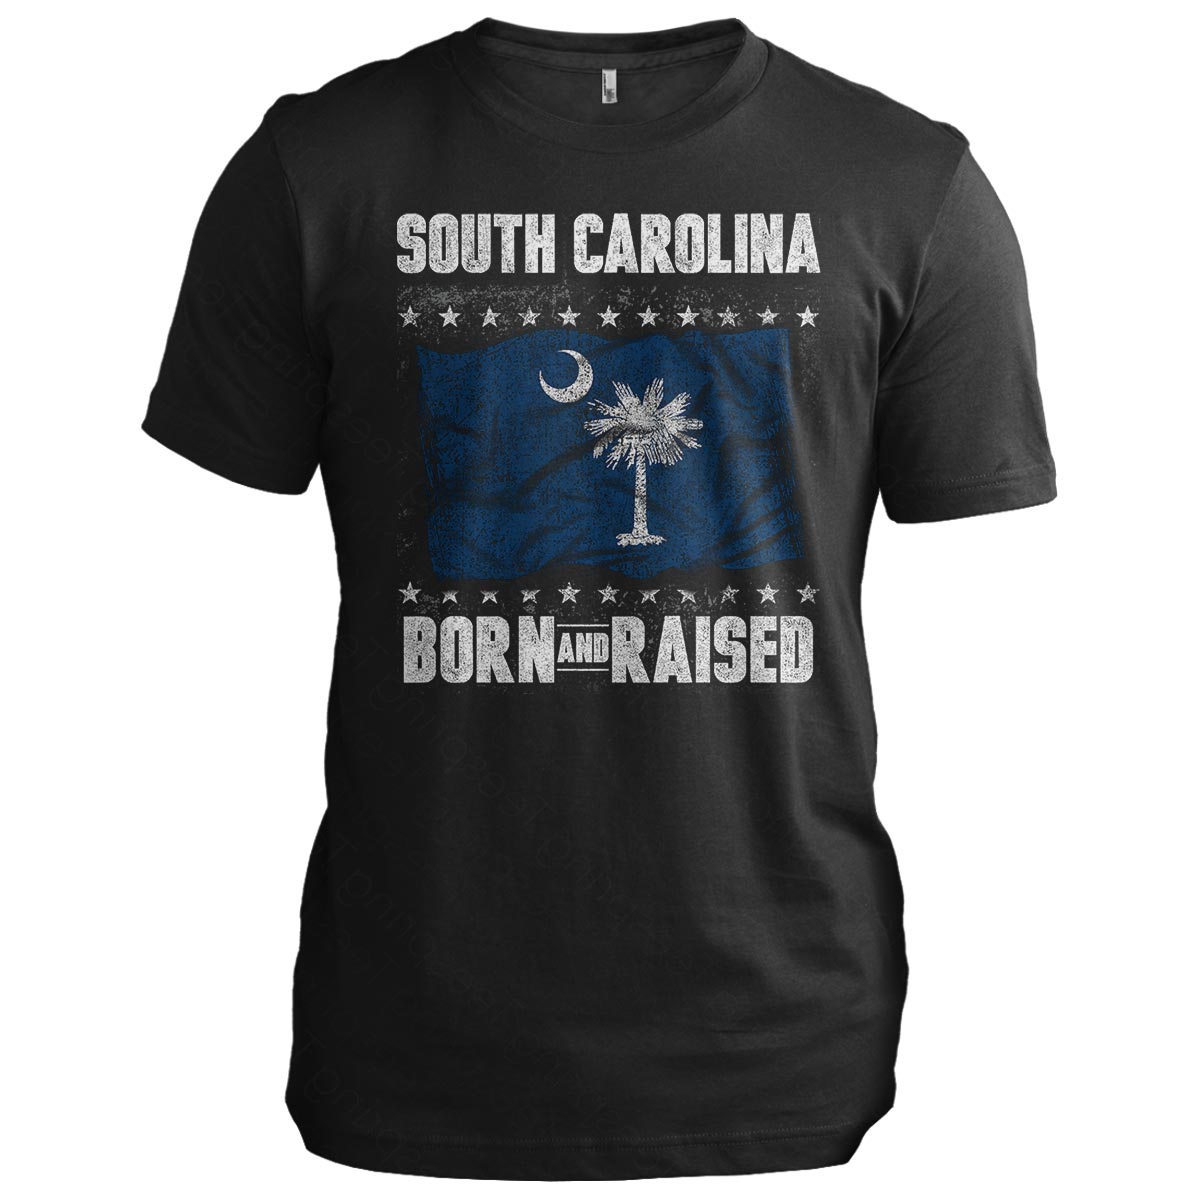 South Carolina: Born and Raised